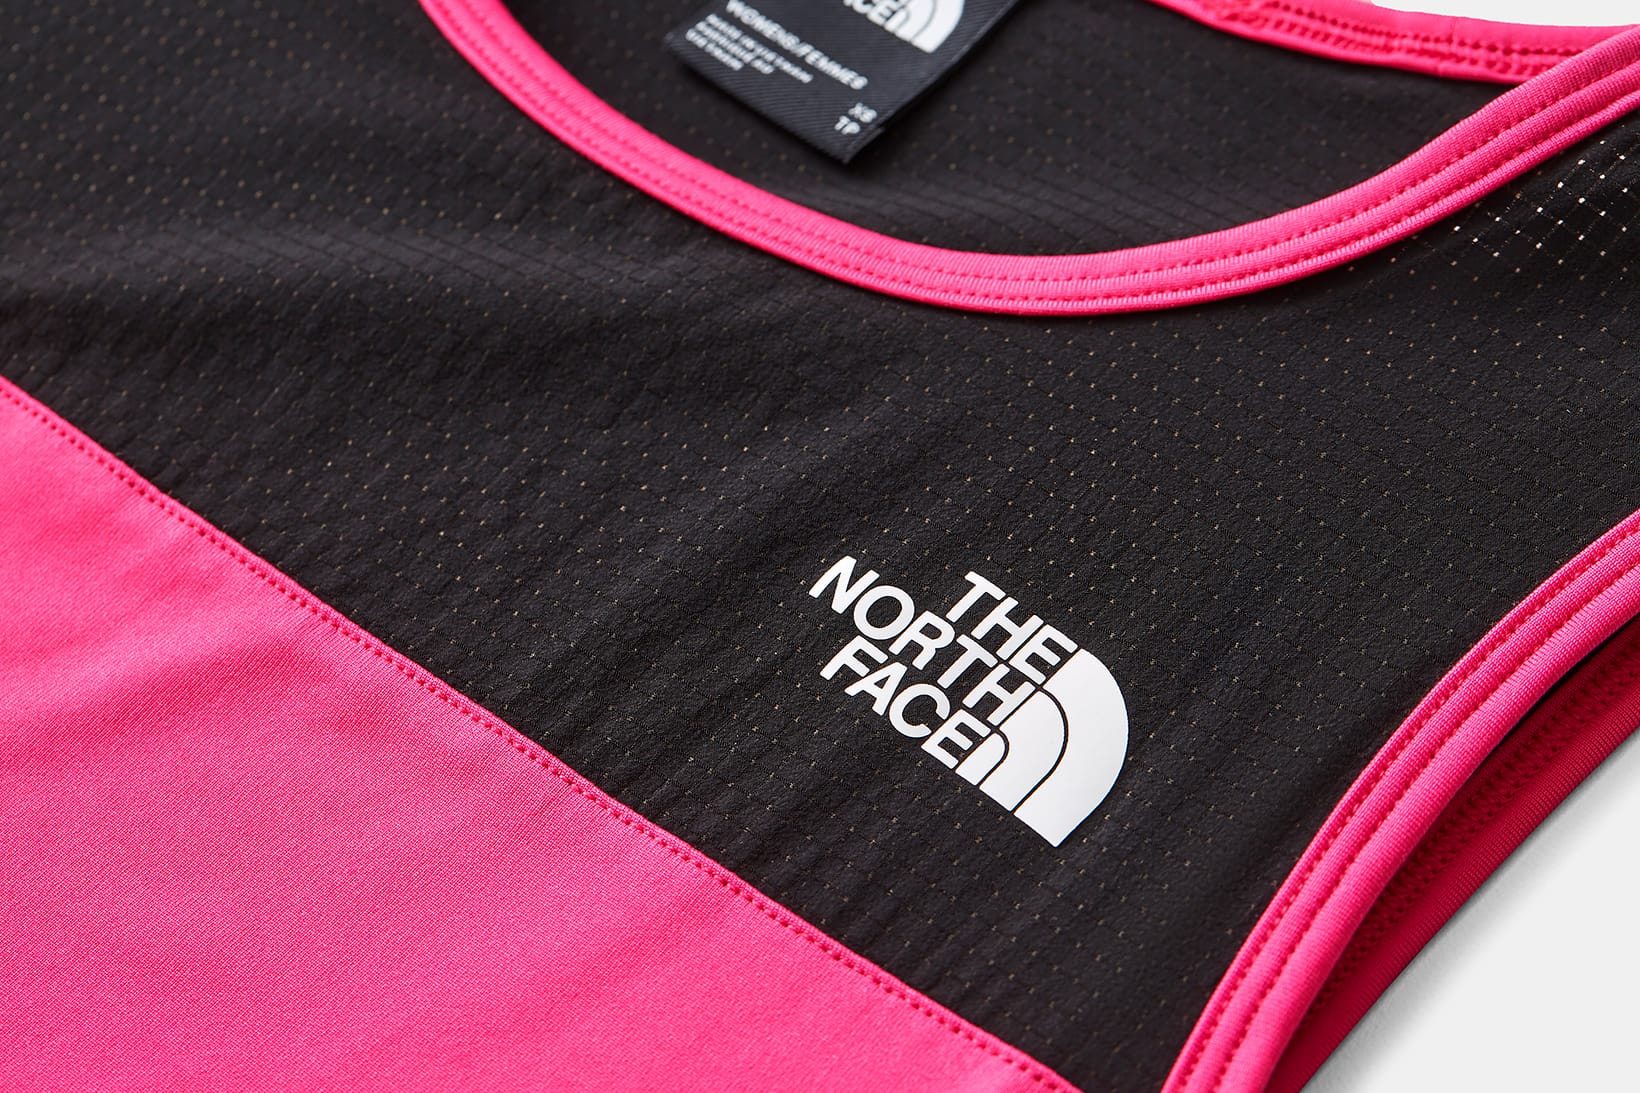 the north face sportswear